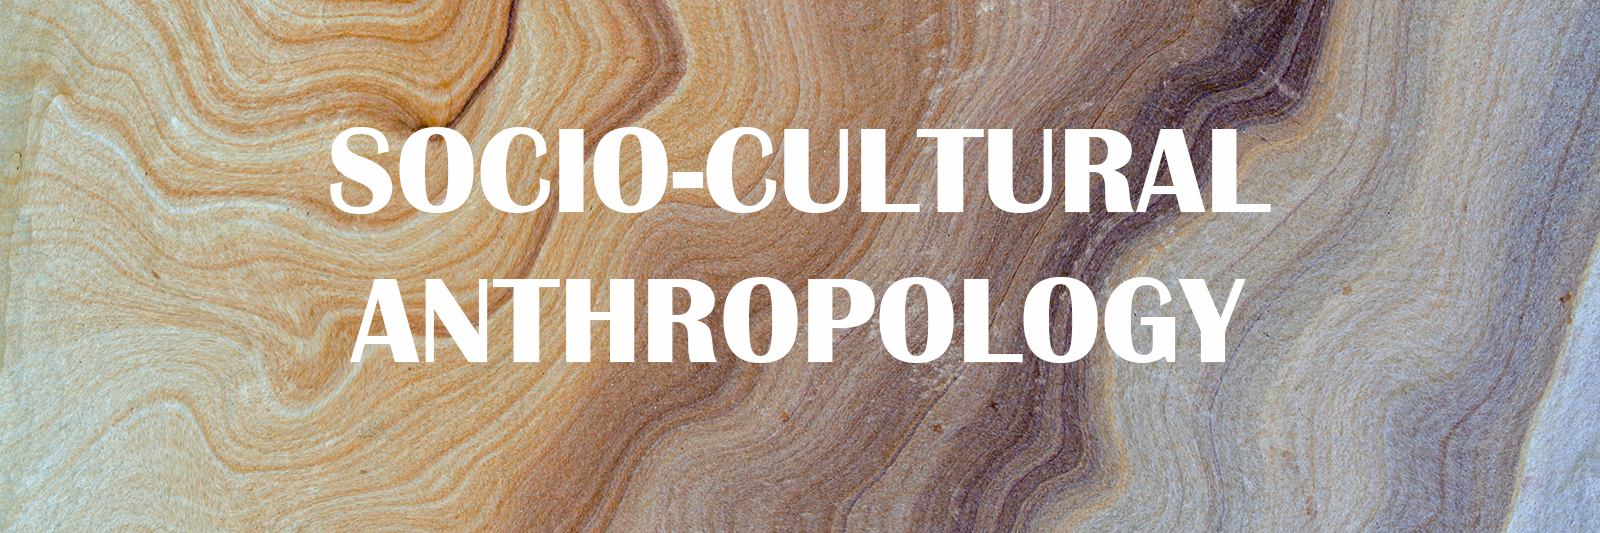 Socio-cultural Anthropology